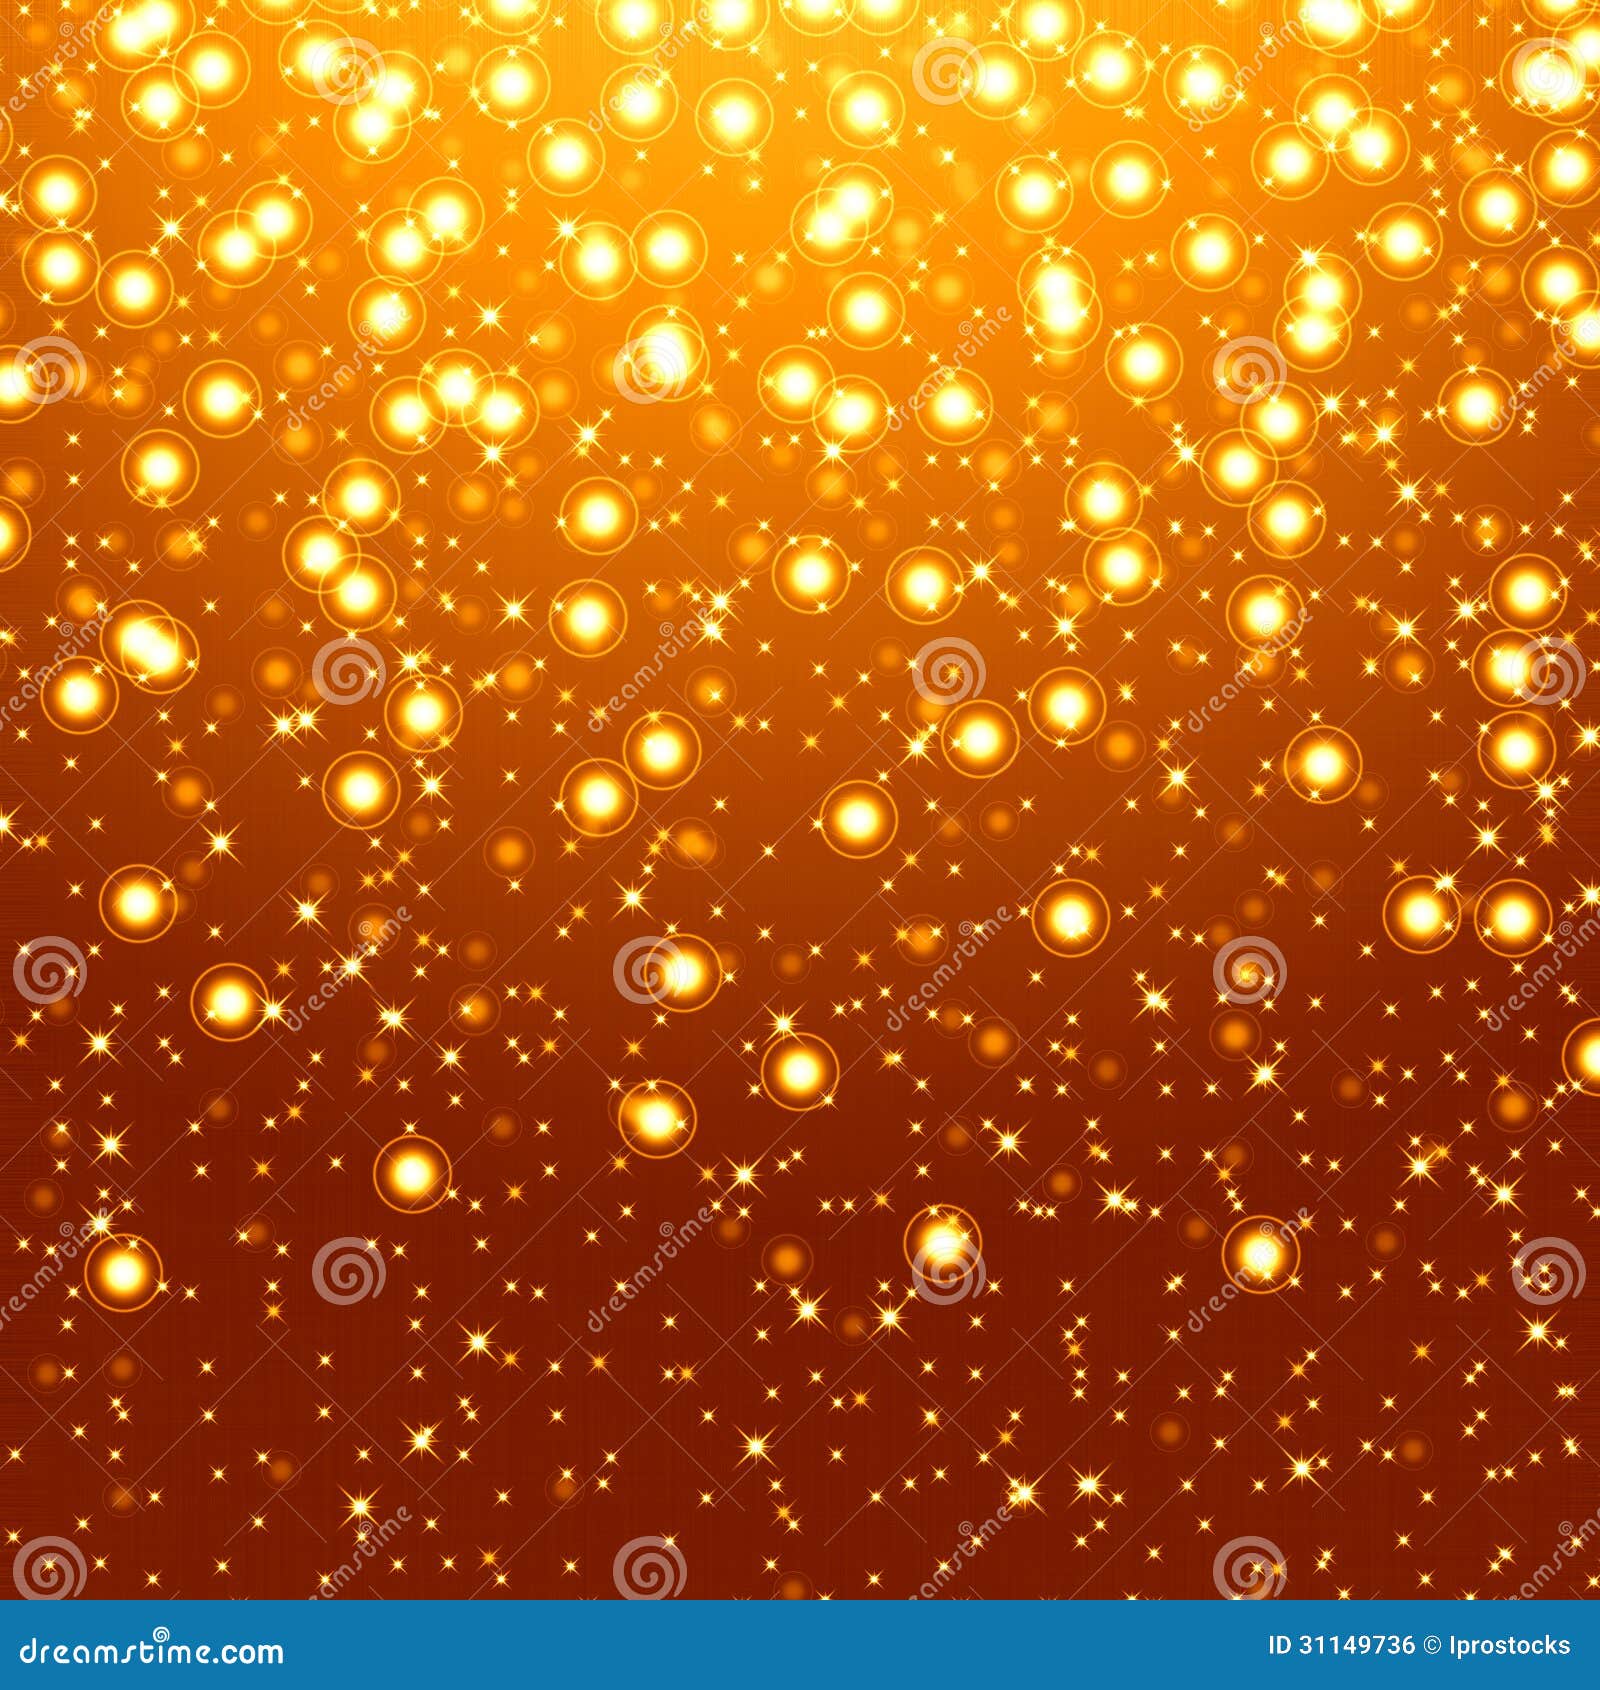 Golden Christmas Background Royalty Free Stock Image 